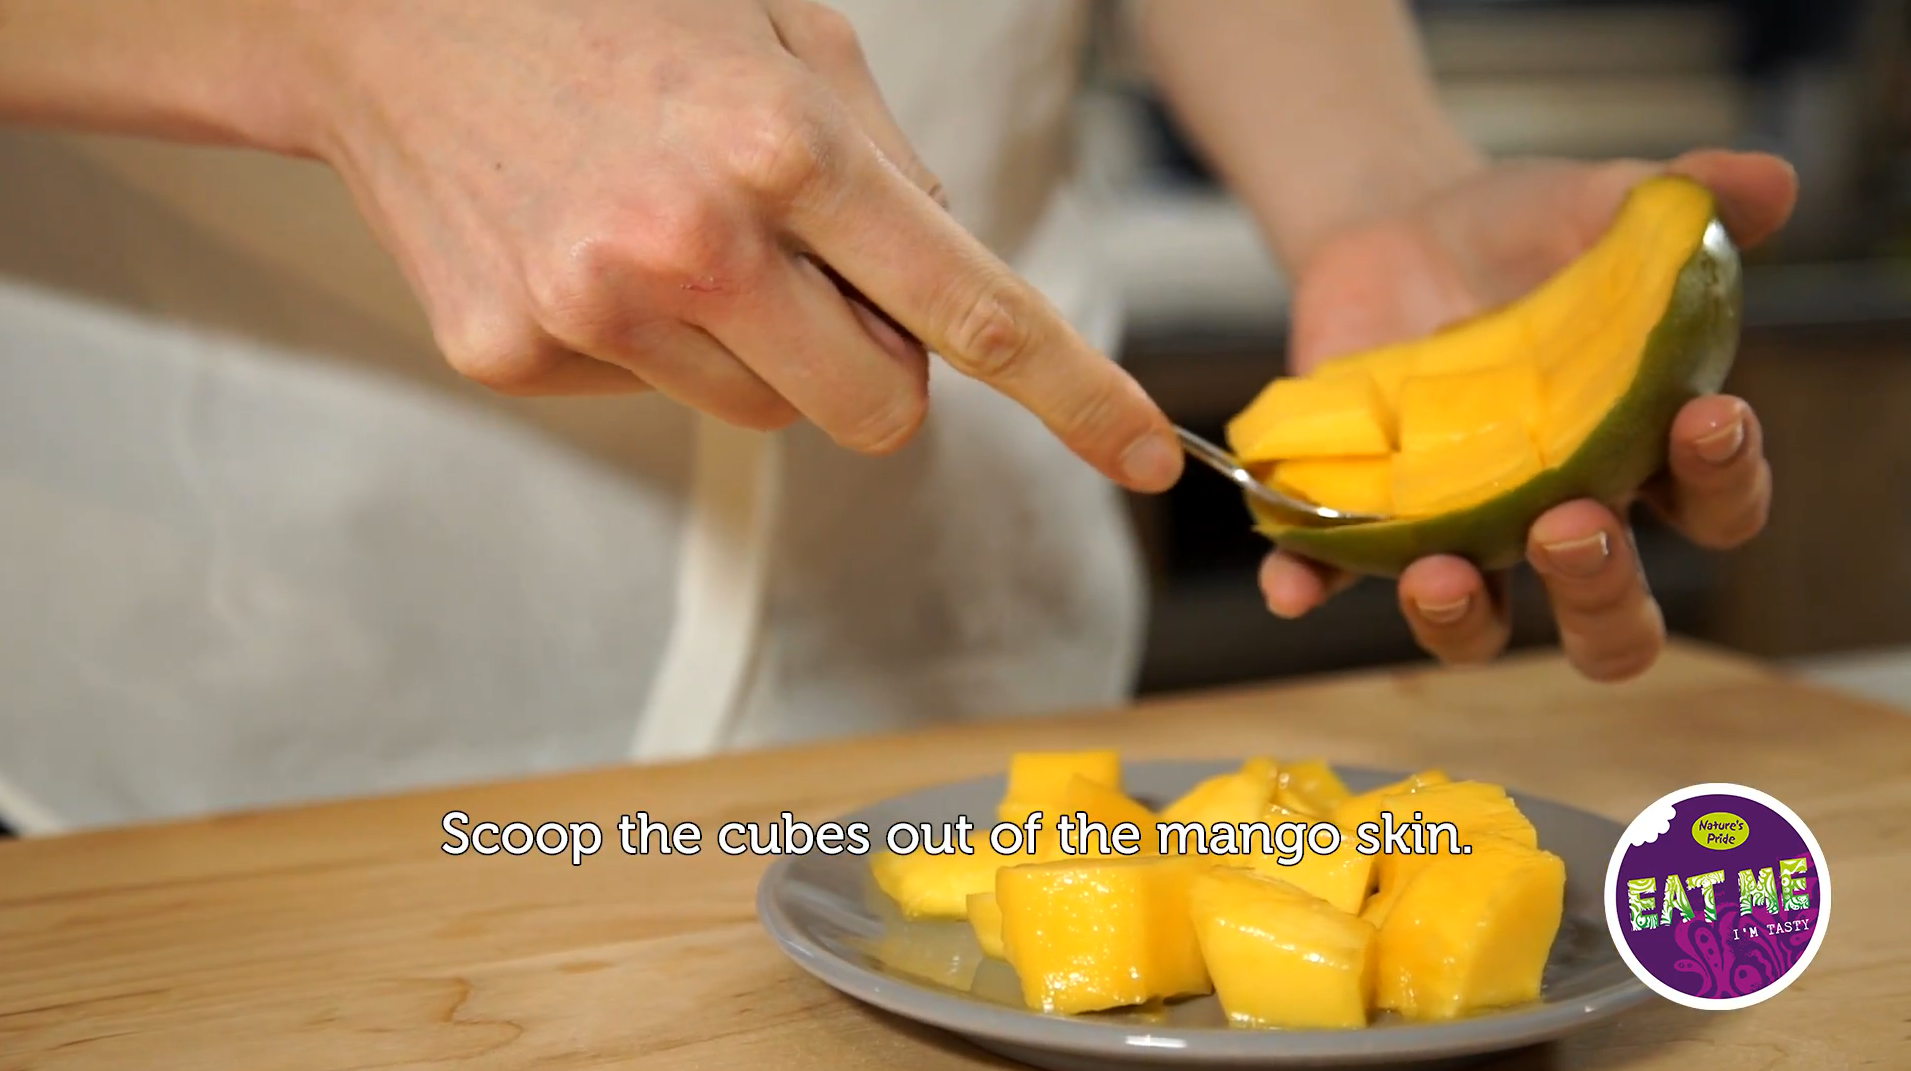 joseph joseph mango slicer